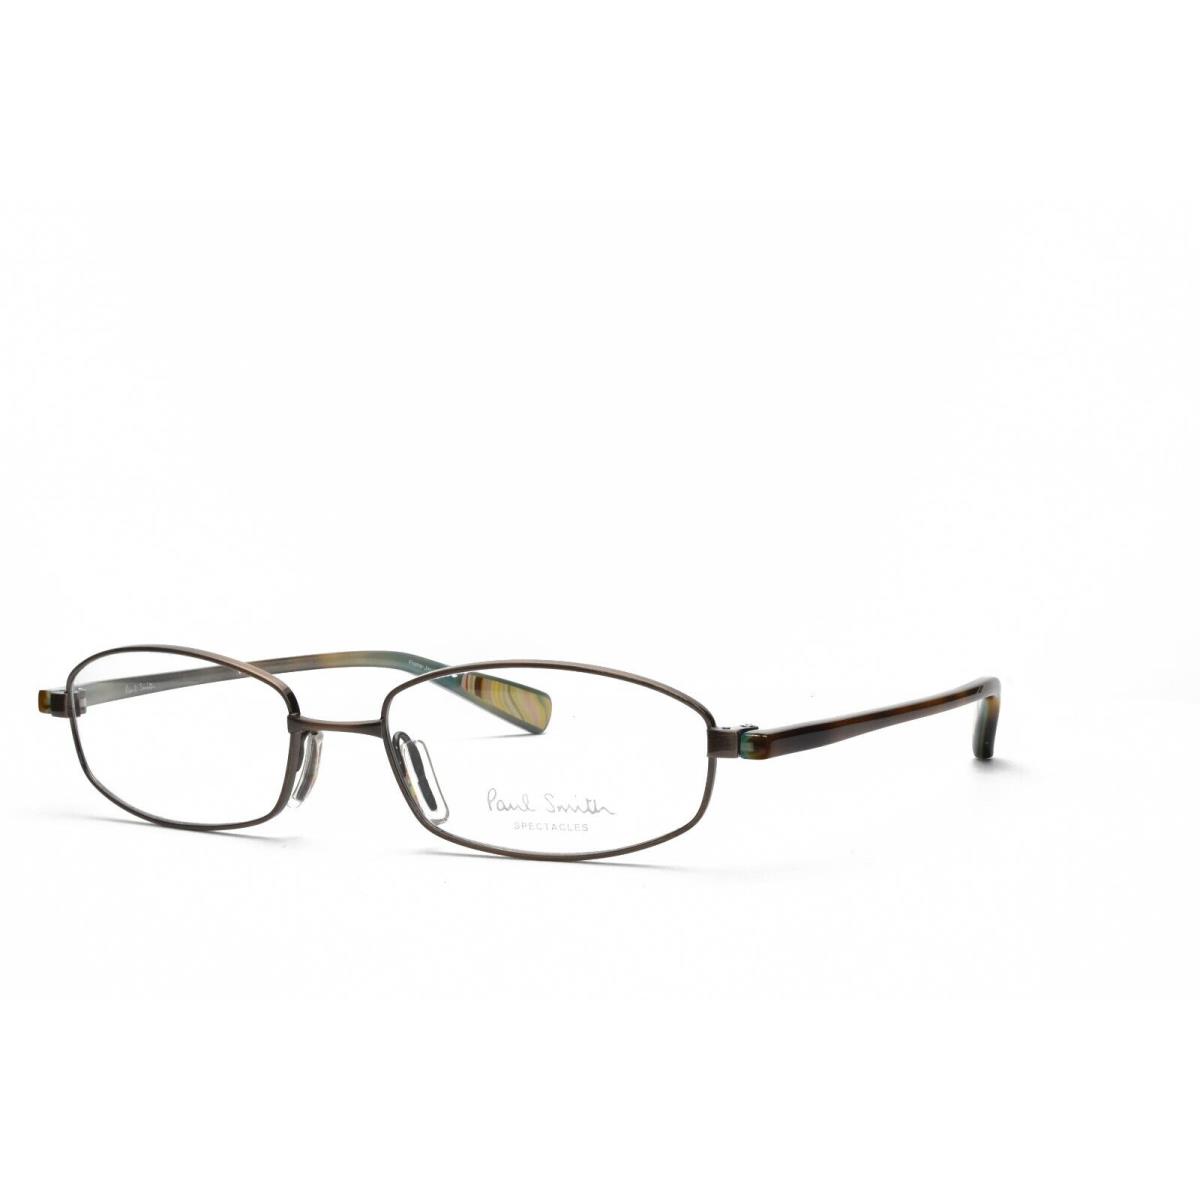 Paul Smith PS 194 MC Eyeglasses Frames Only 51-16-140